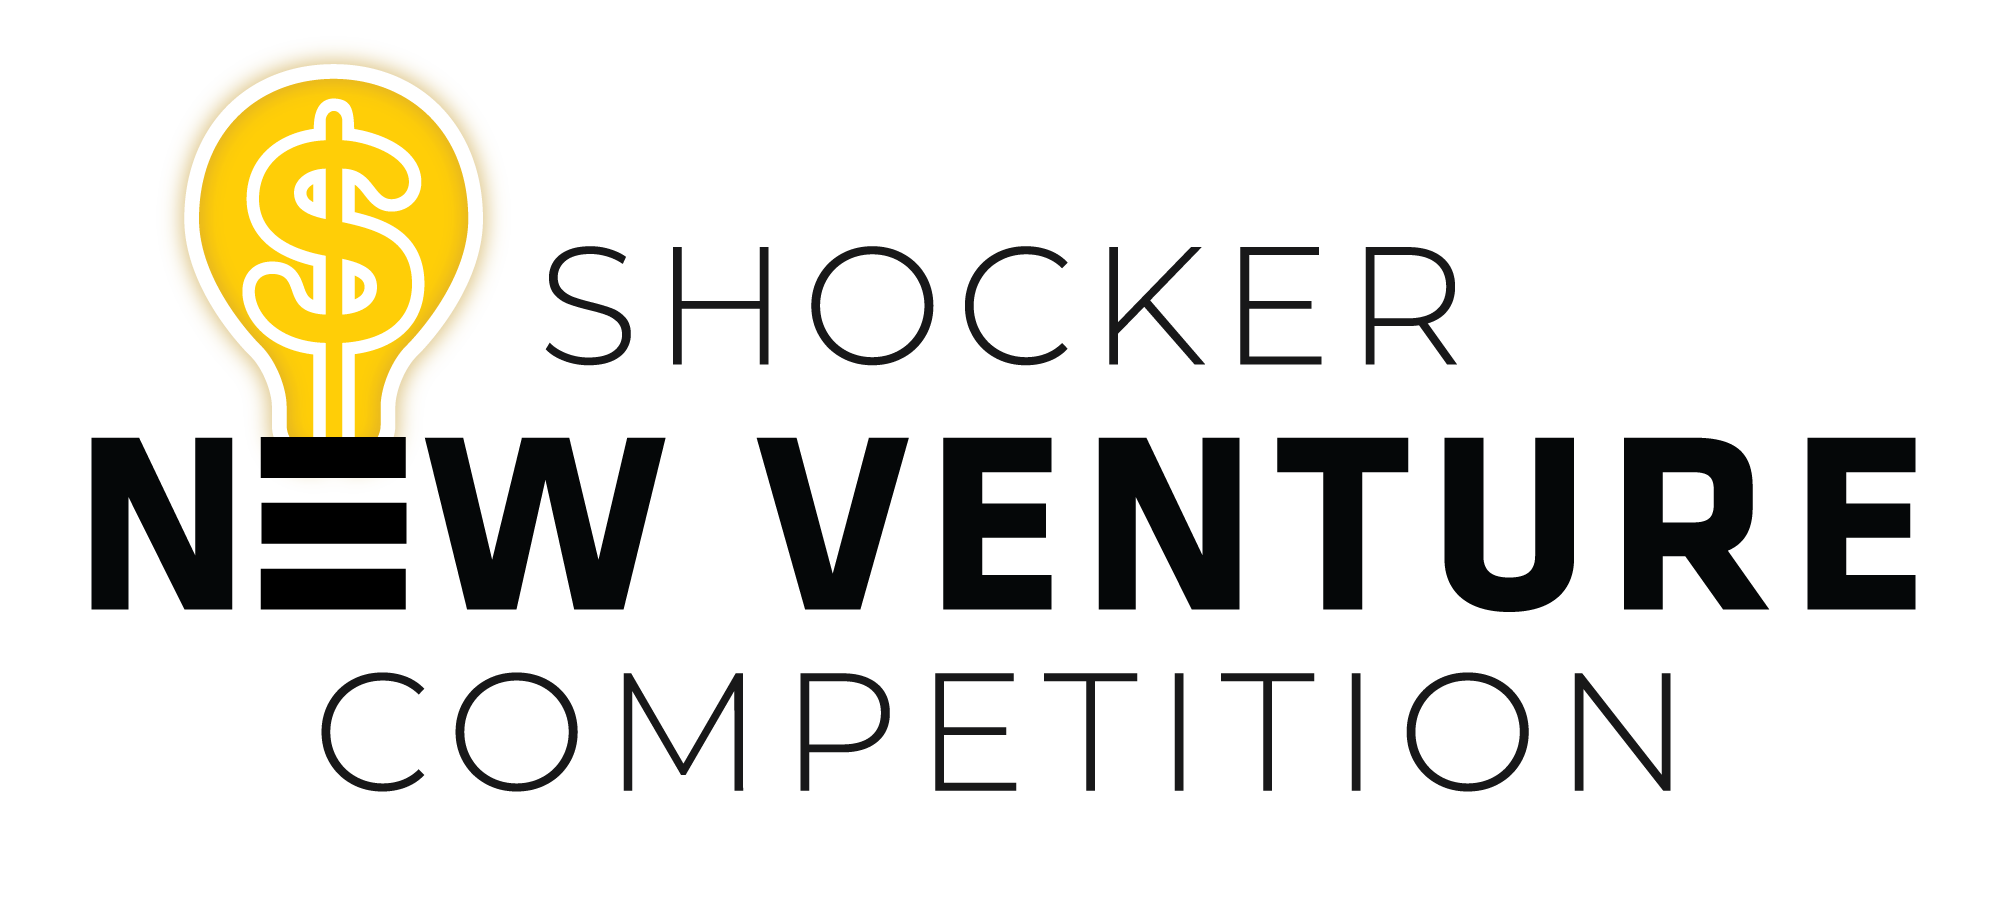 shocker new venture competition logo